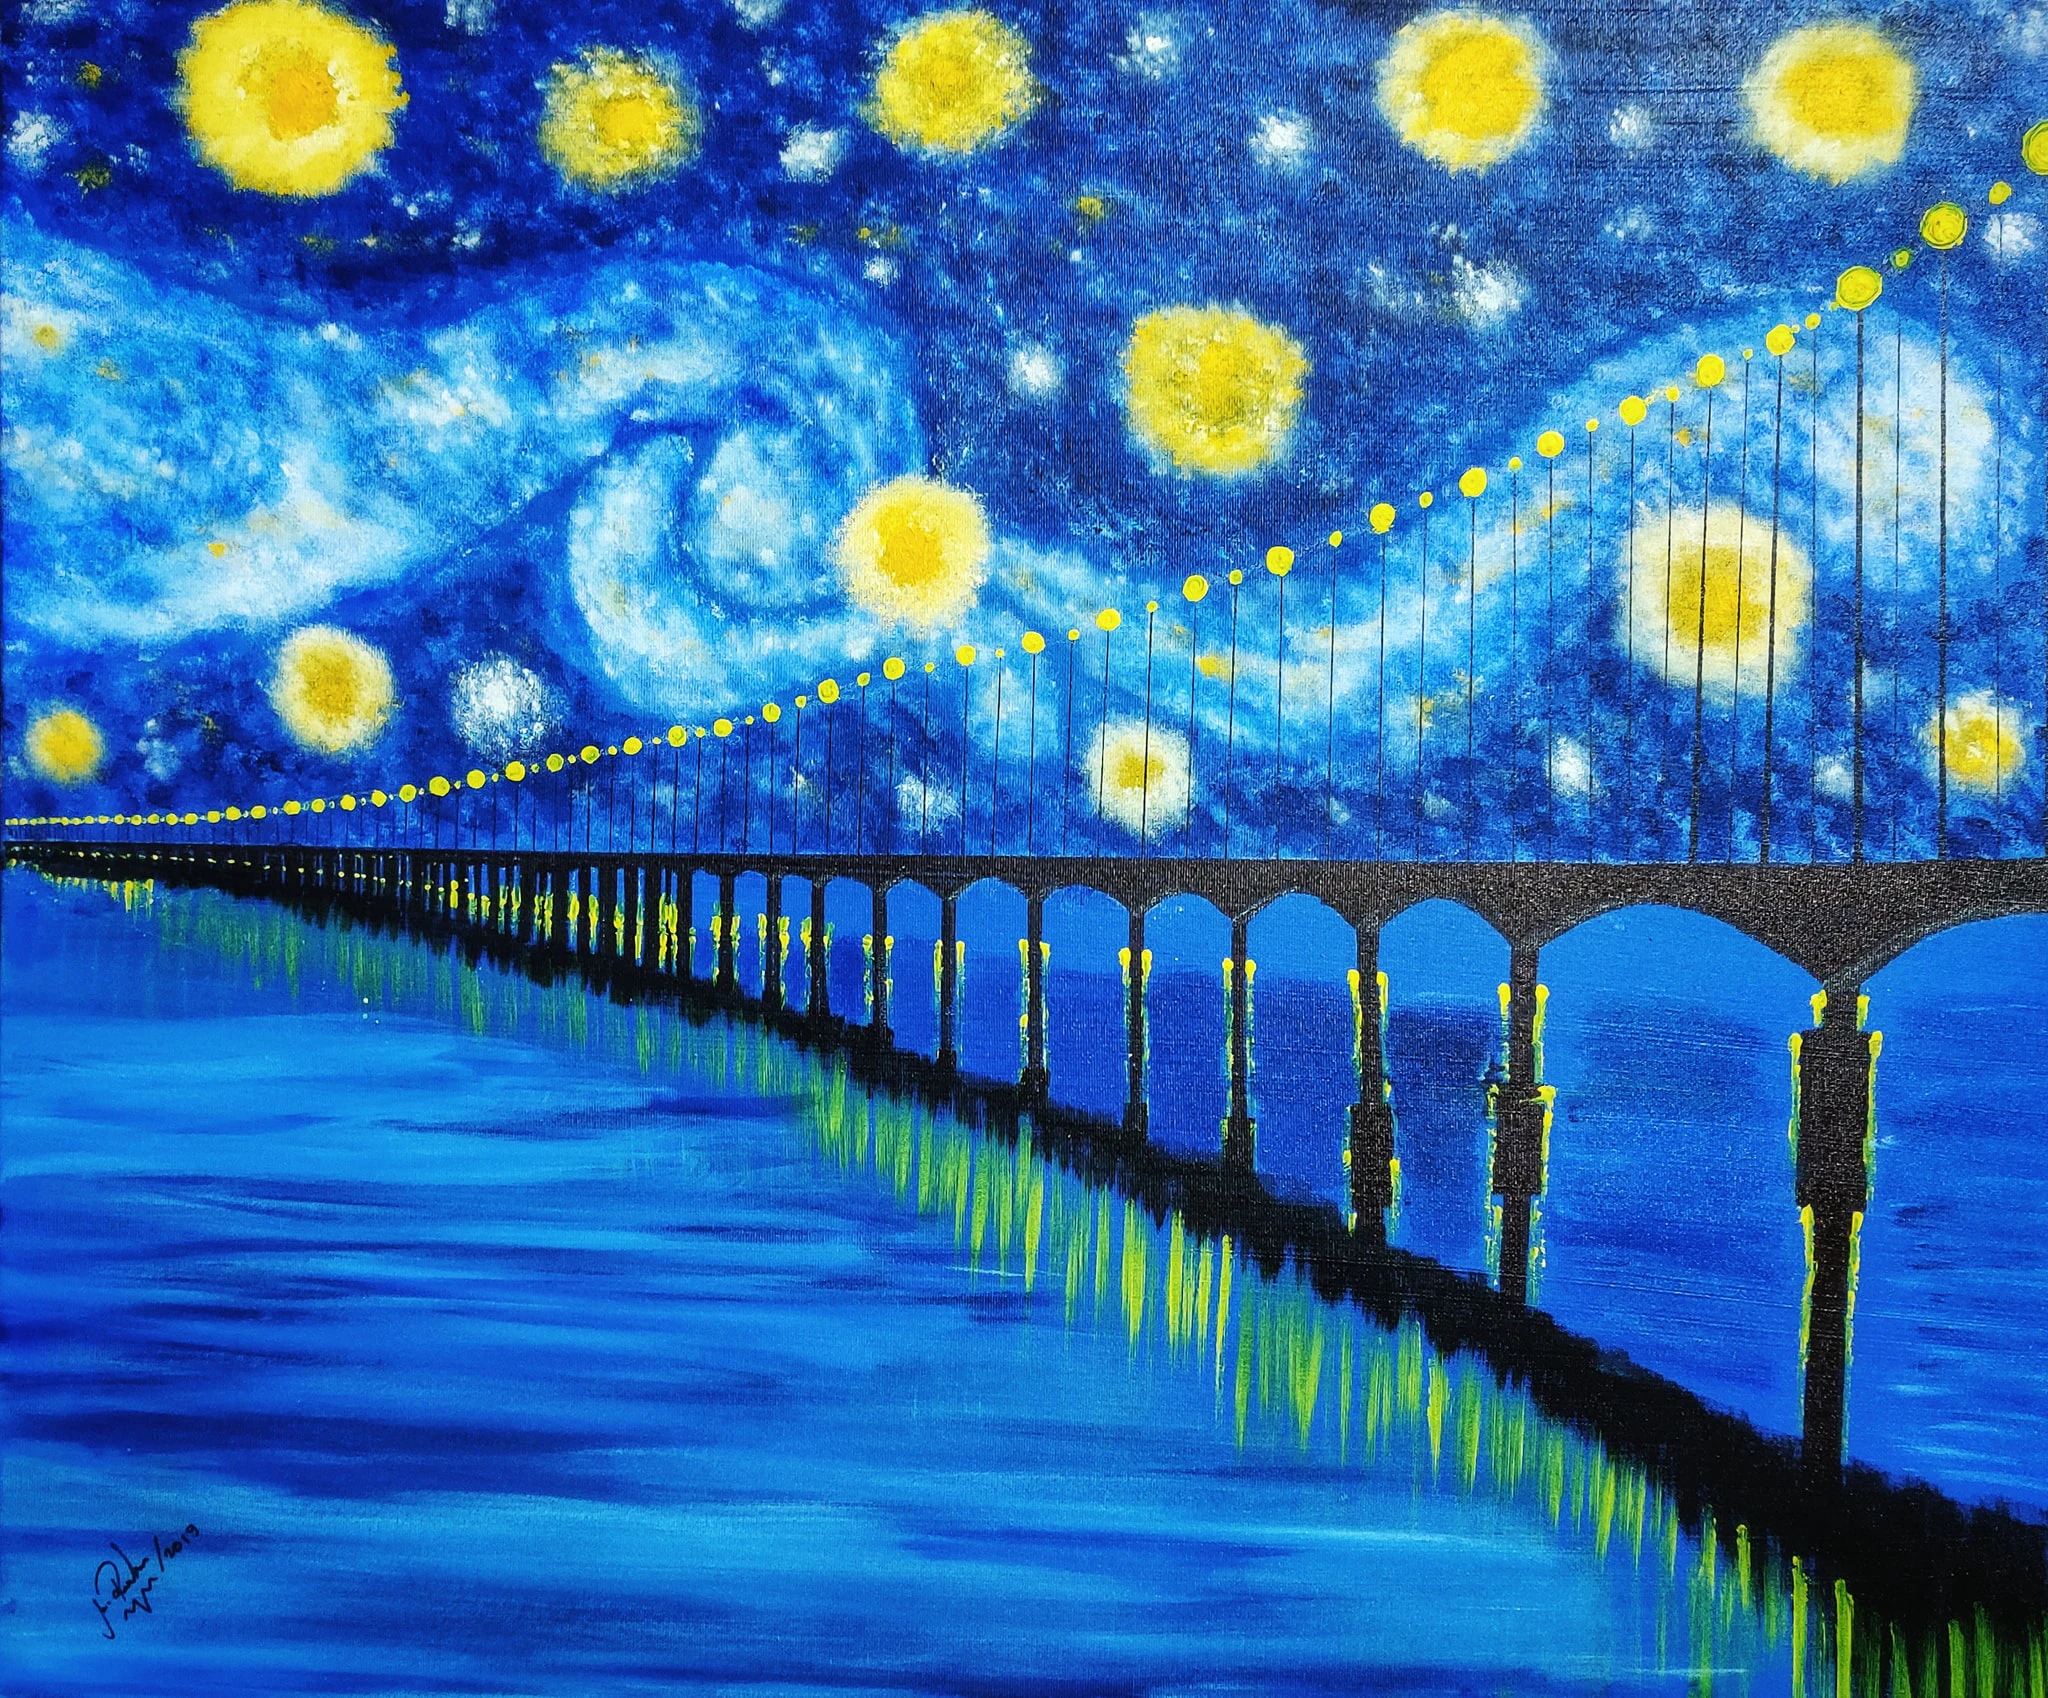 The Bridge & The Starry Night